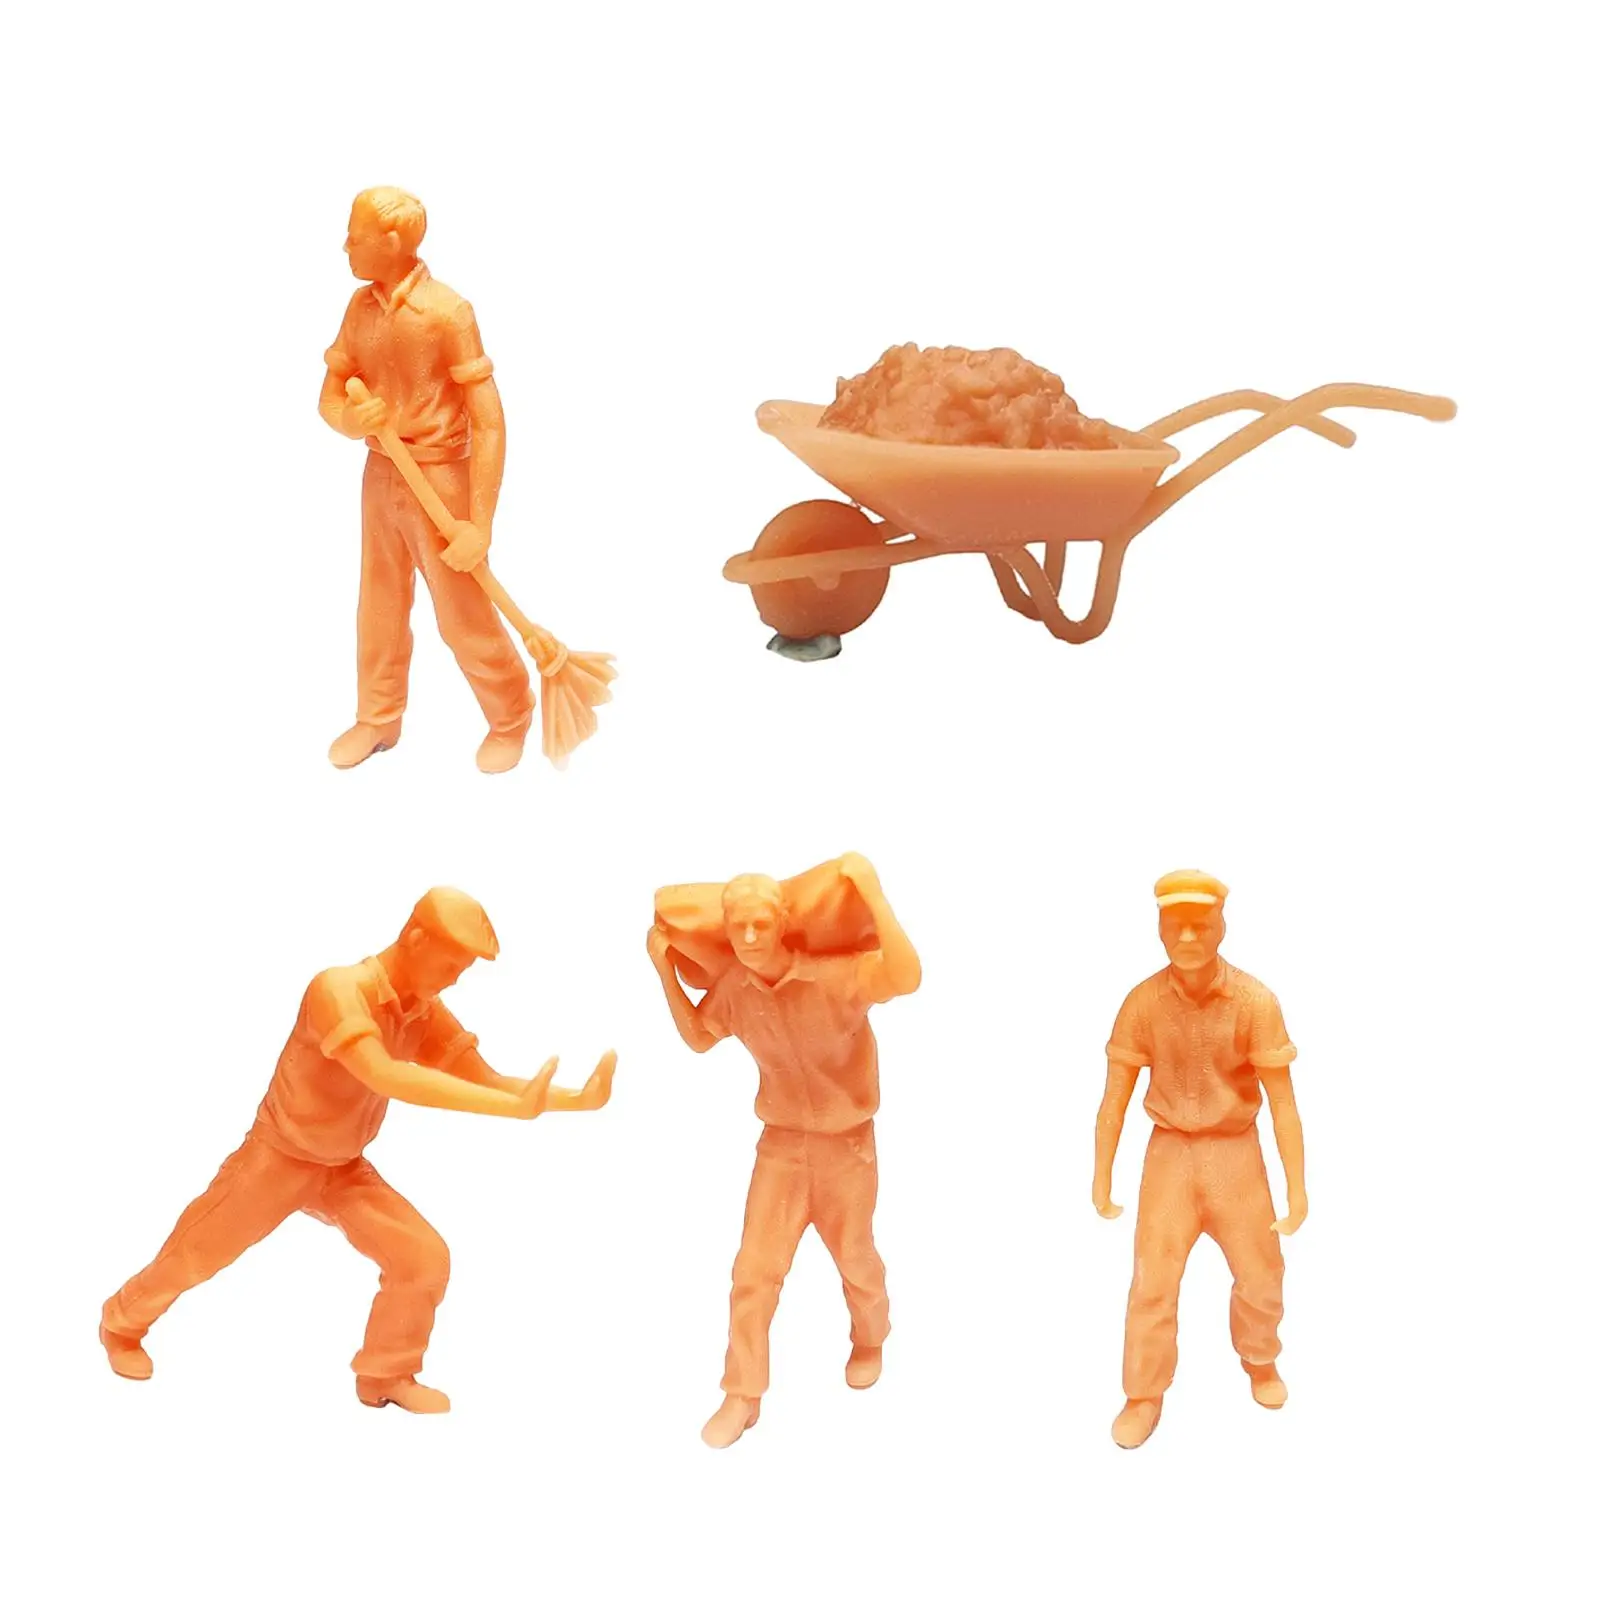 Tiny 1/64 Construction Worker Figure DIY Projects S Gauge Doll Resin People Model for Railway Model Desktop Decor Street Scene